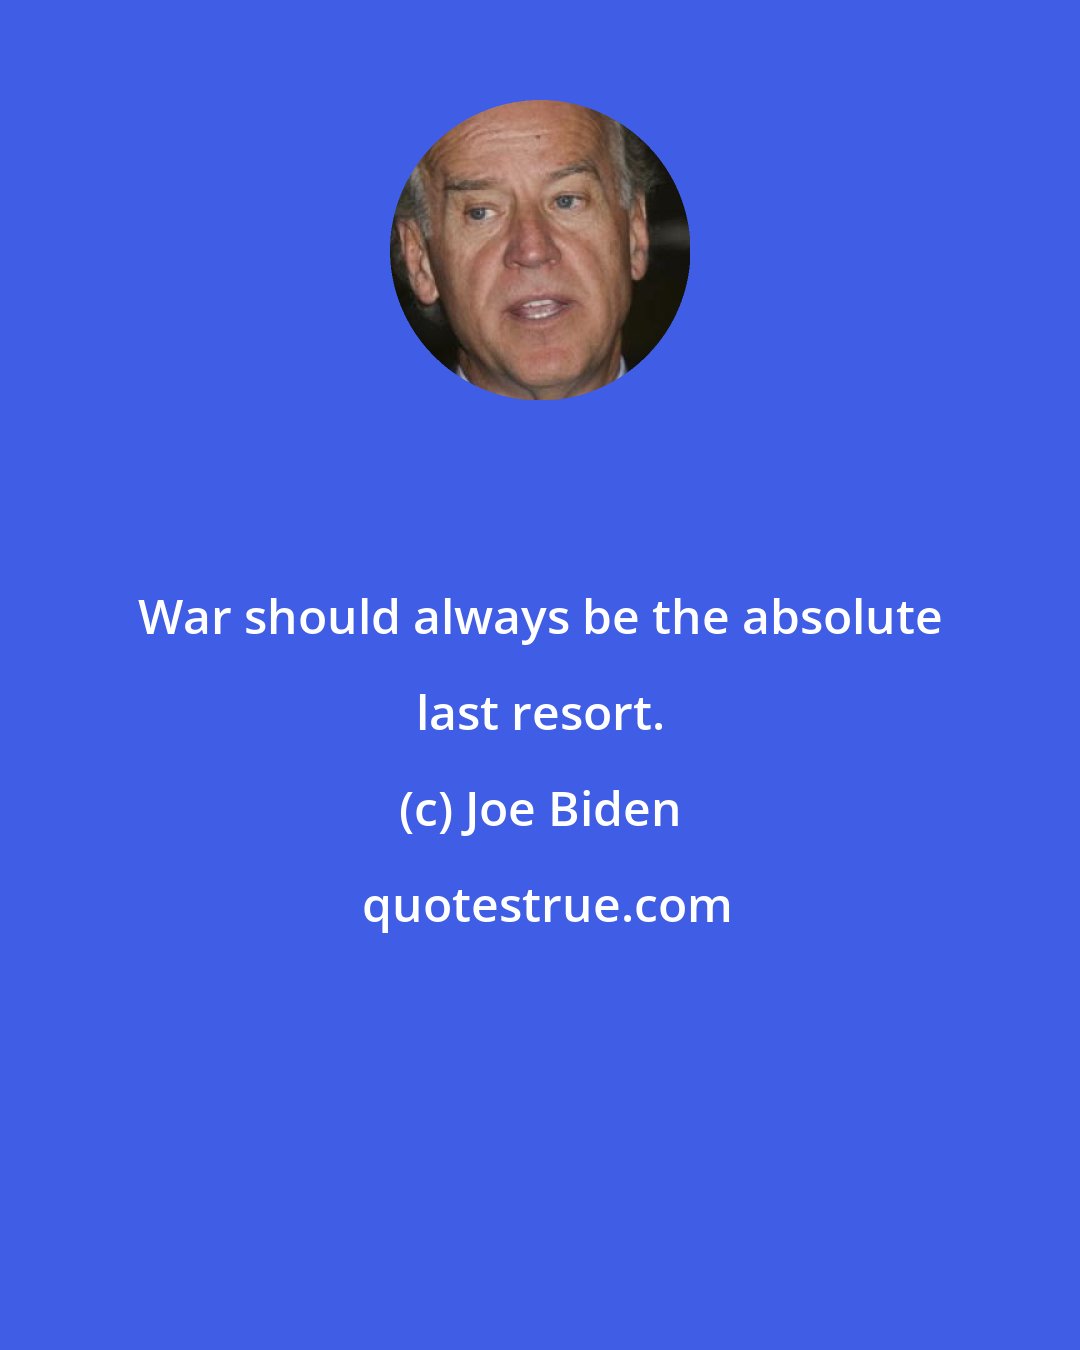 Joe Biden: War should always be the absolute last resort.